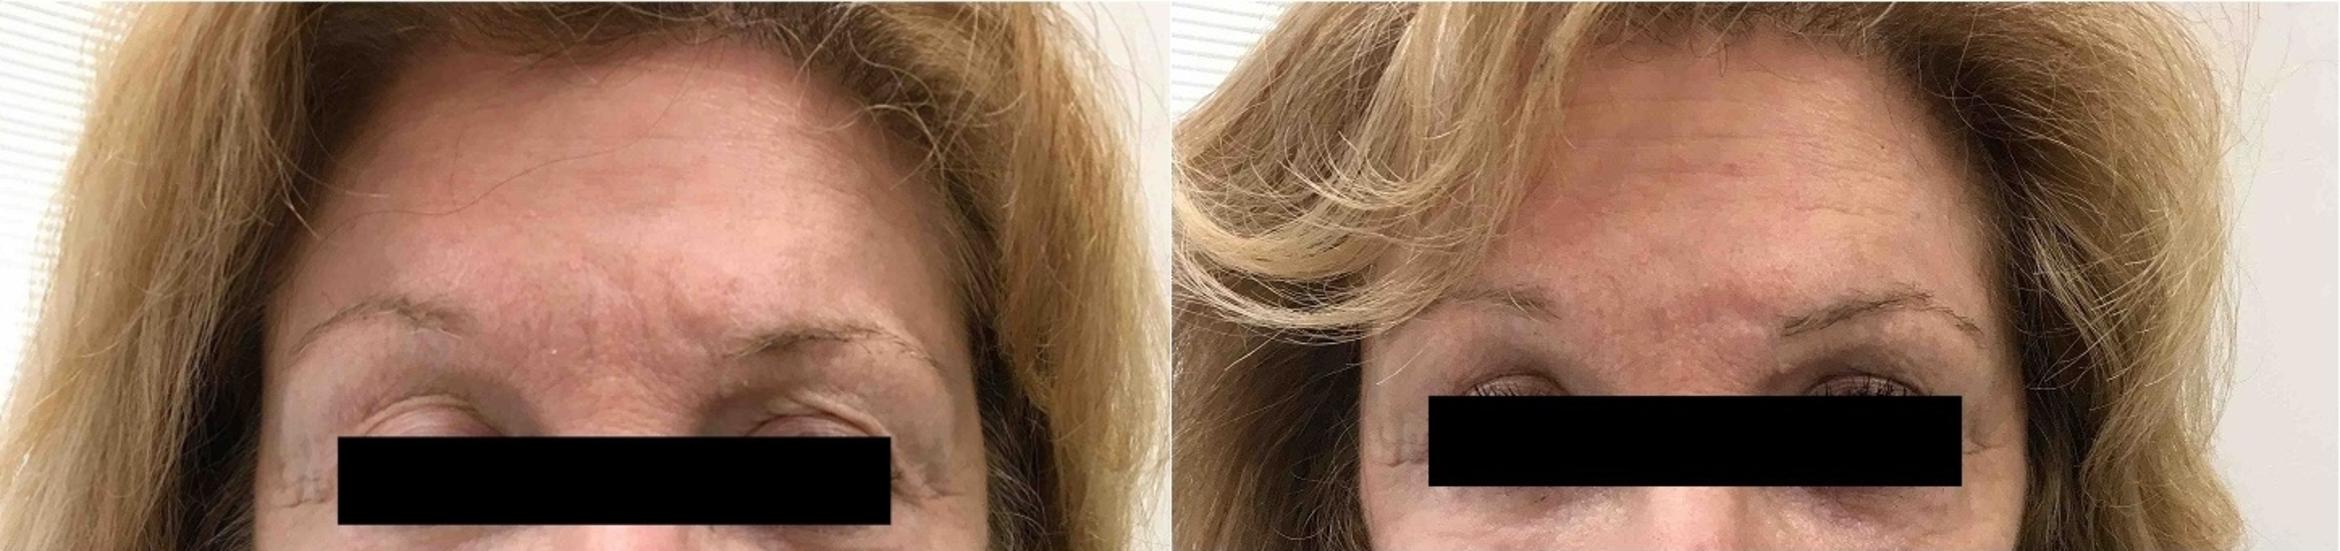 Exilis Ultra Skin Tightening Case 17 Before & After Front | Washington, DC | MI Skin Dermatology Center: Melda Isaac, MD